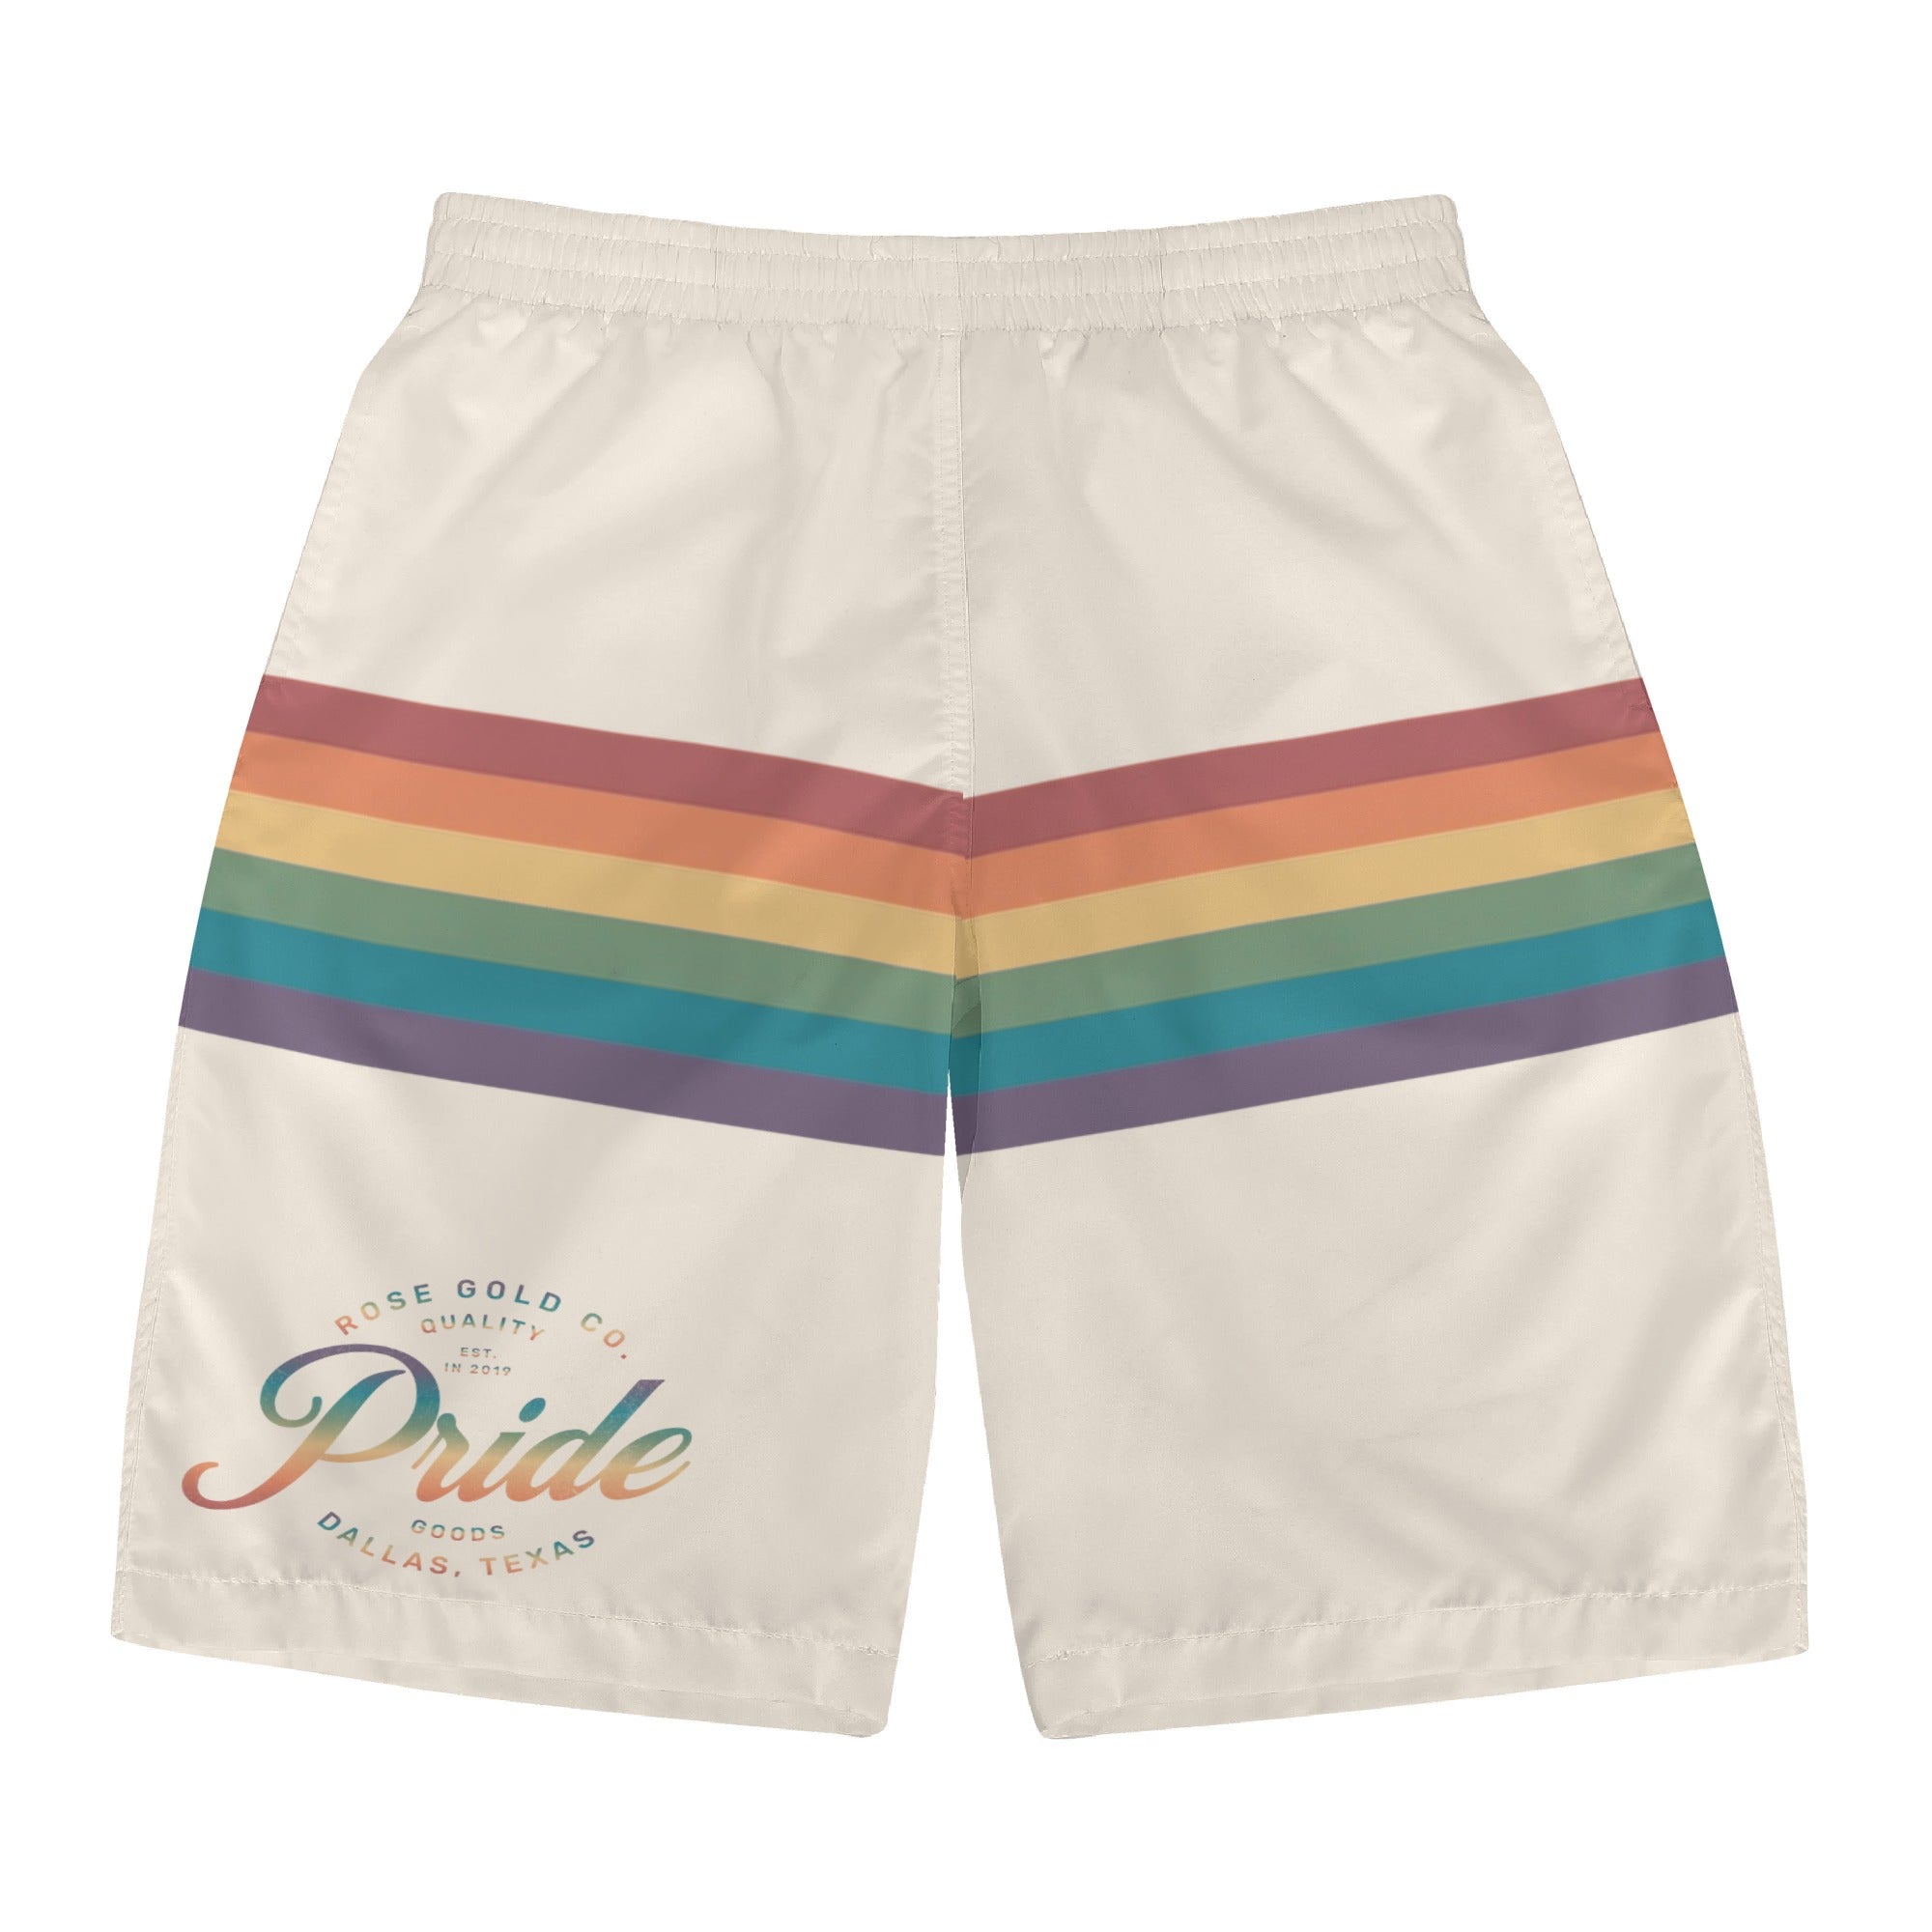 Rainbow Stripe LGBT Pride Jersey Board Shorts - Rose Gold Co. Shop